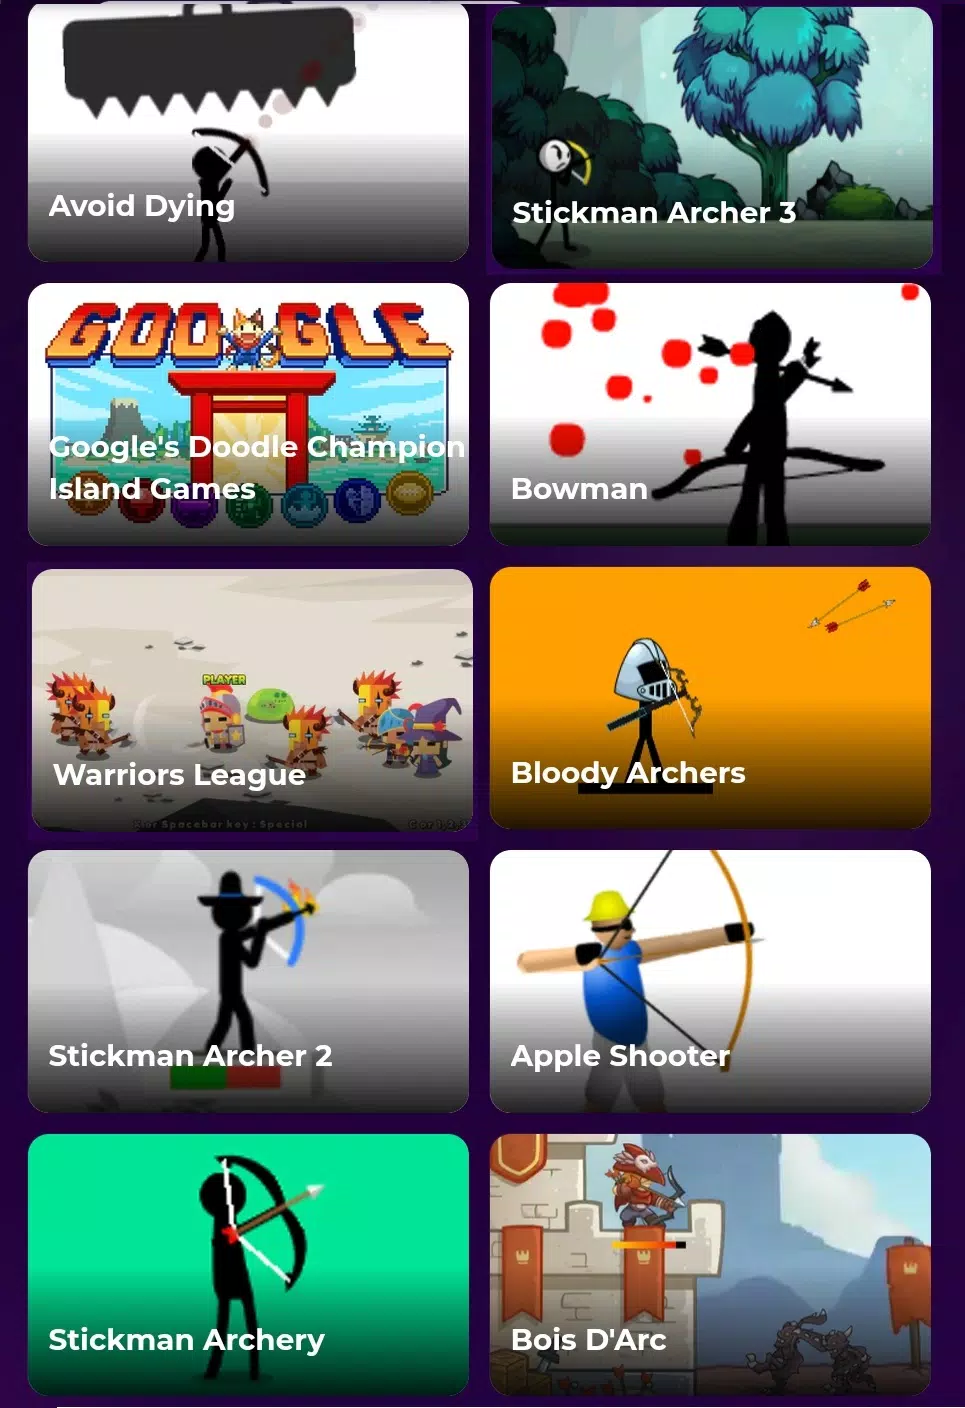 Download do APK de Doodle Champion Island Games para Android